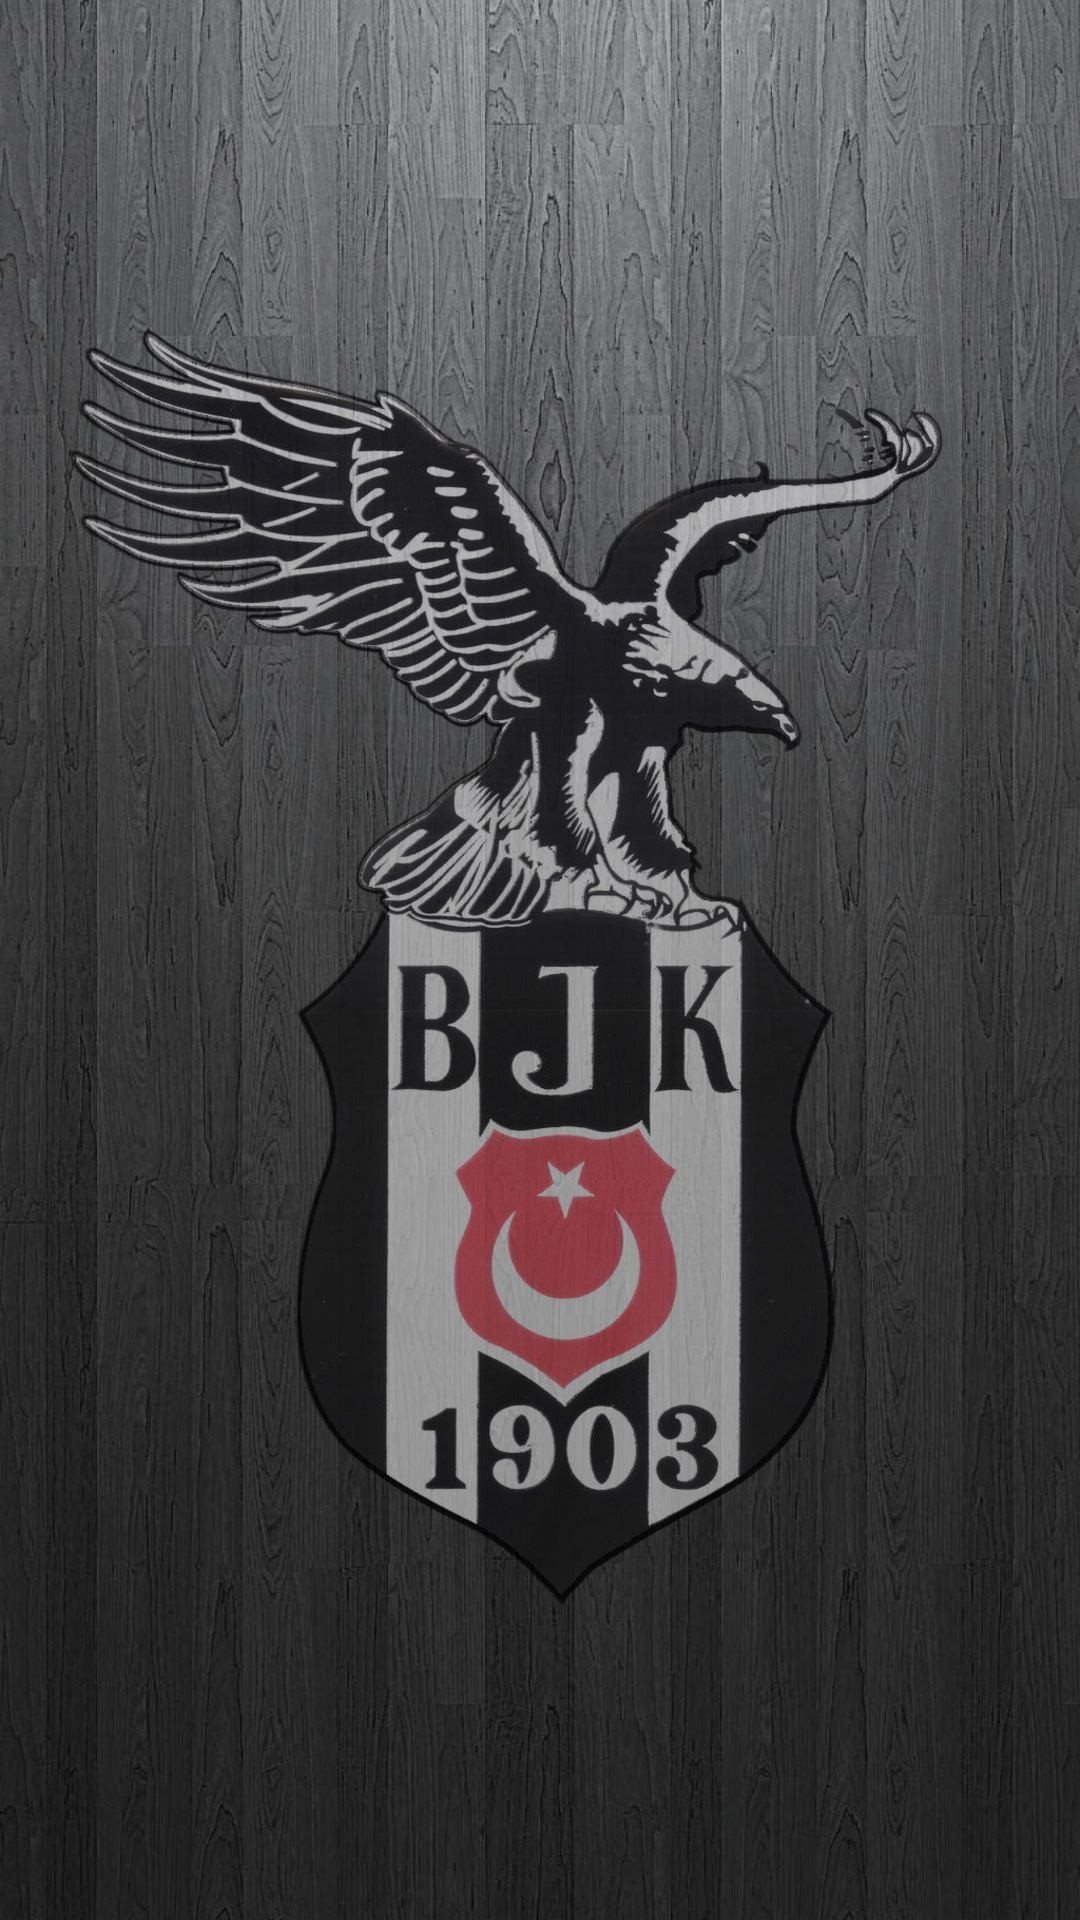 bjk wallpaper,logo,t shirt,emblem,graphics,illustration